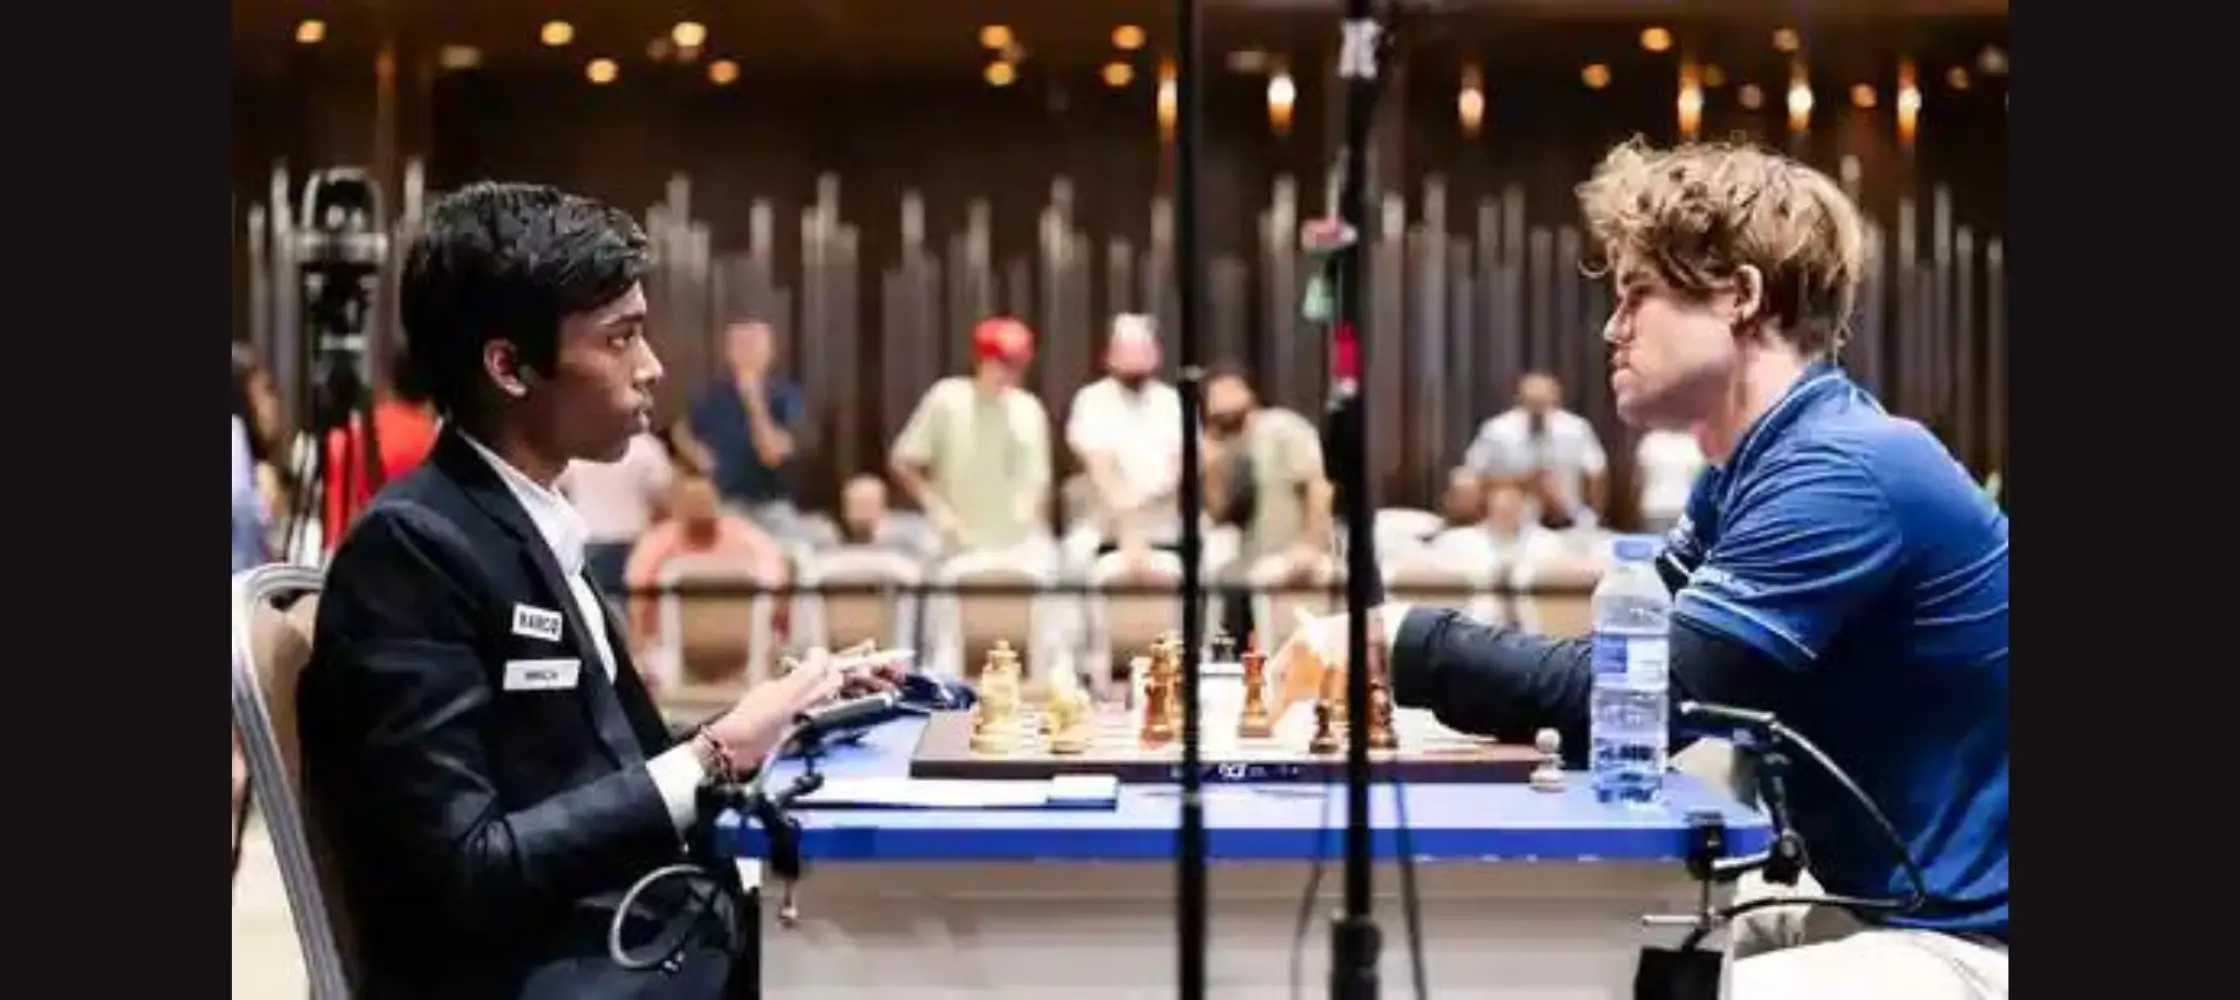 R Praggnanandhaa vs Magnus Carlsen, Chess World Cup final